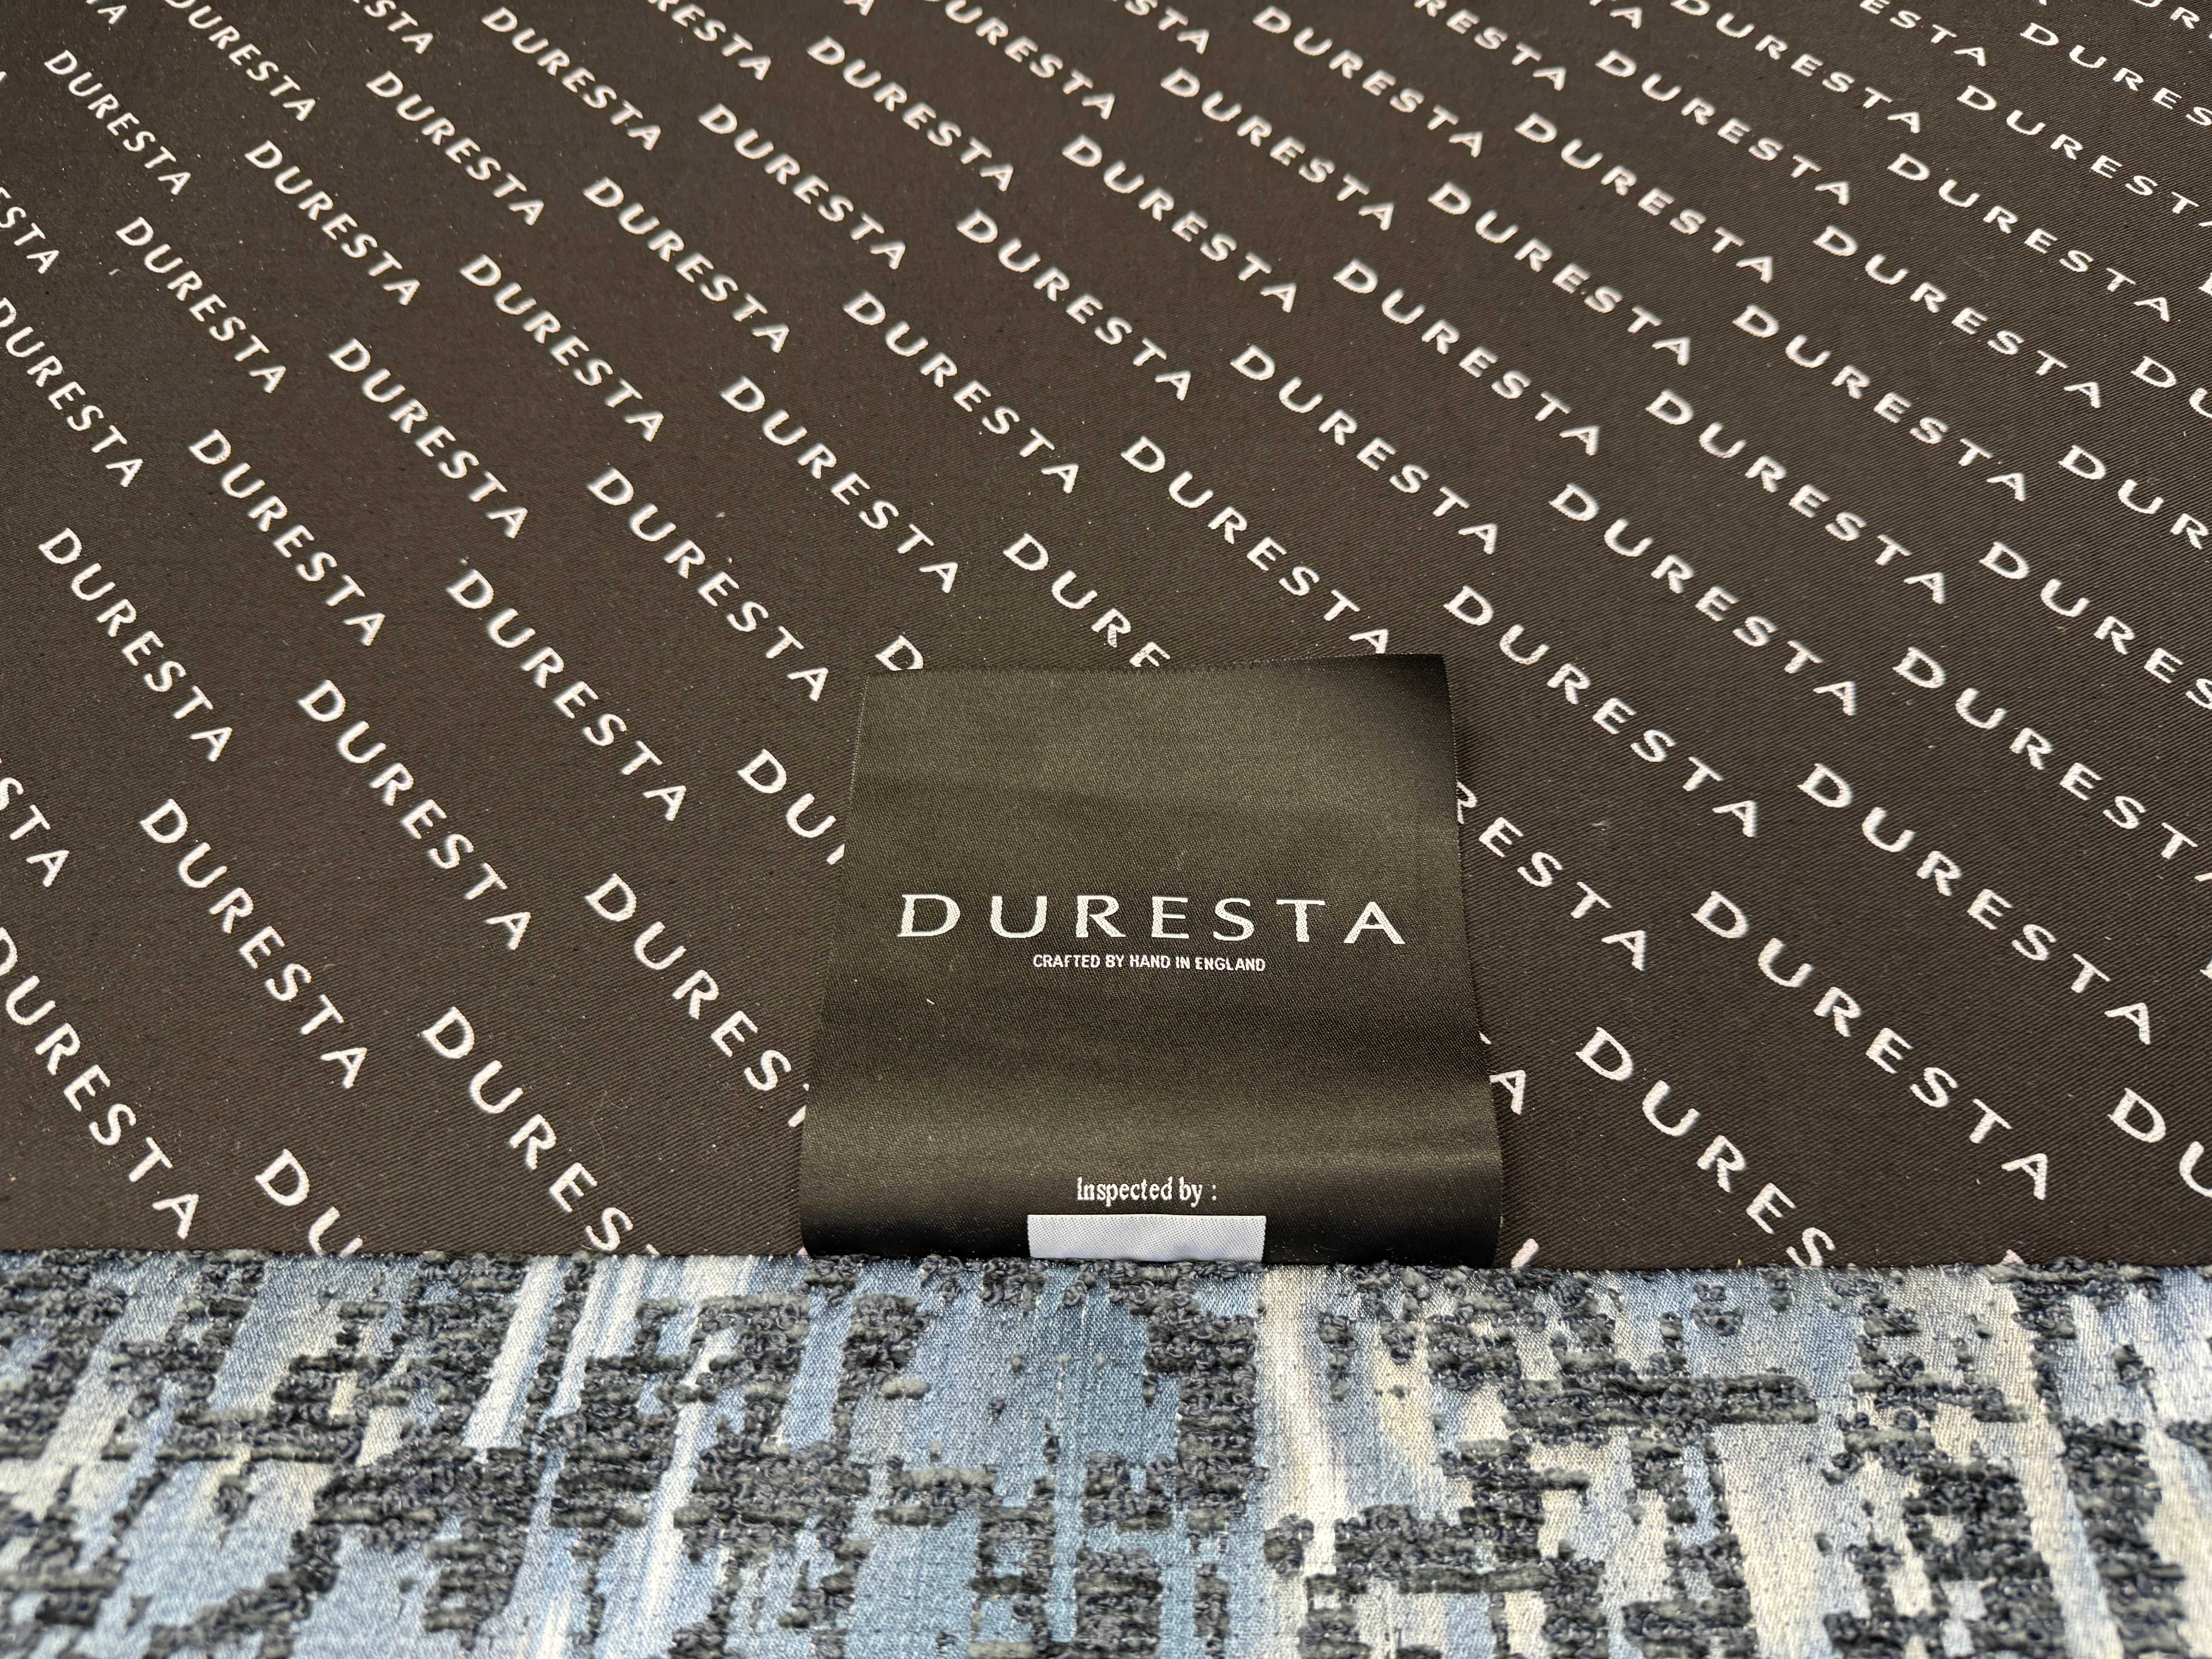 DURESTA STRATUS XL loveseat in Blue / grey combination fabric